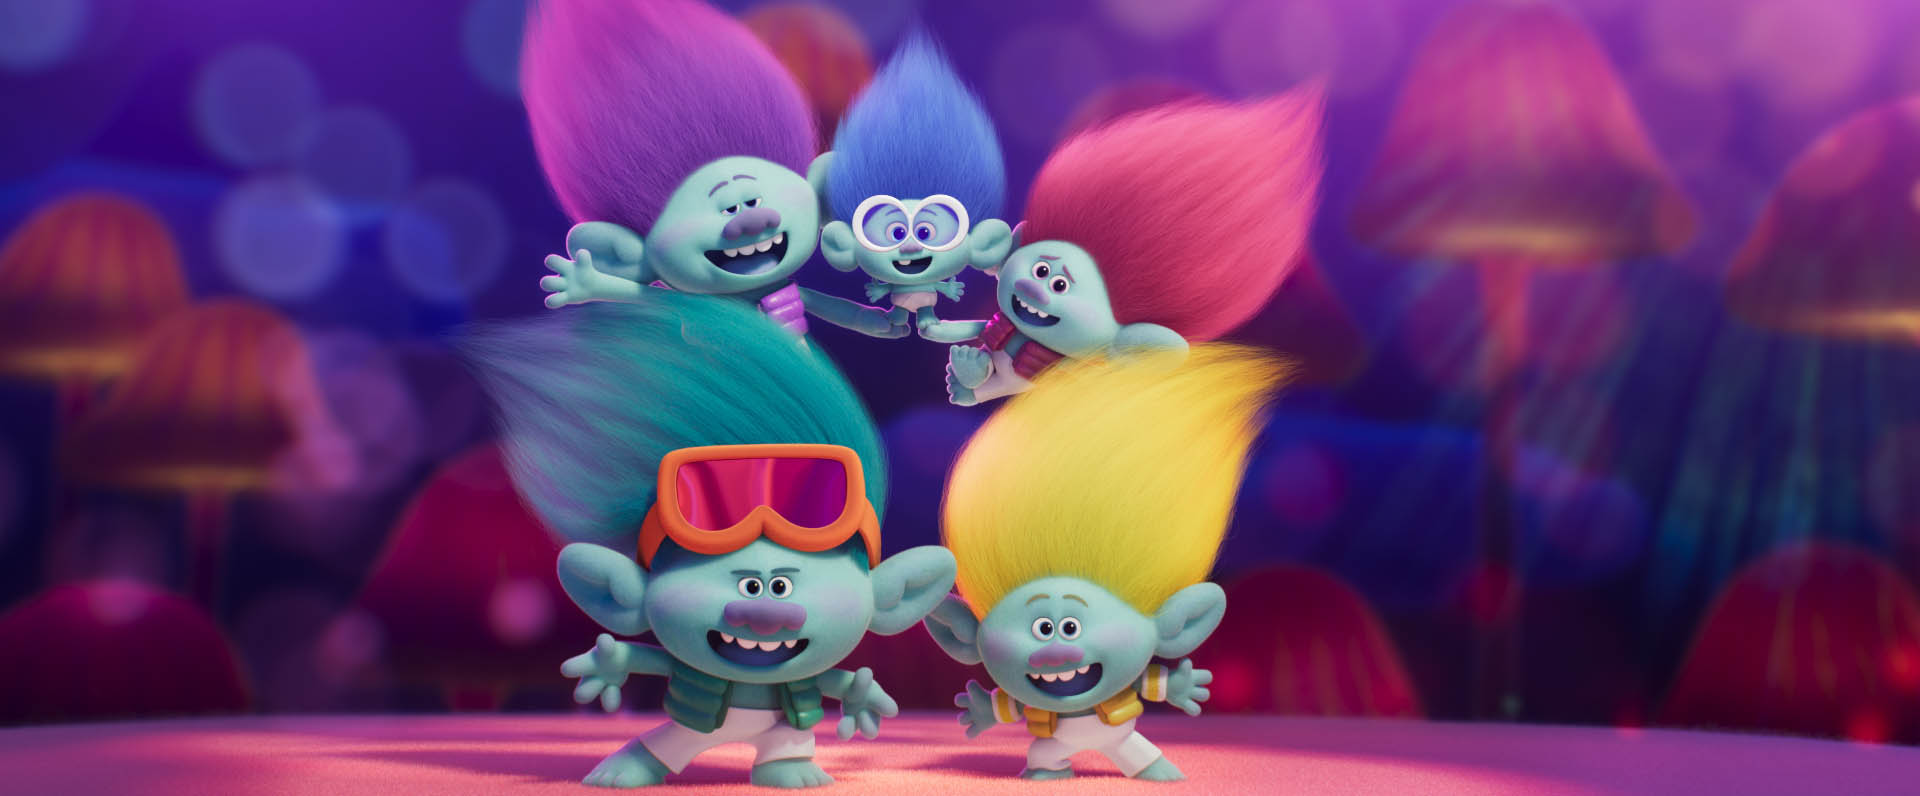 Trolls 3 - Tutti Insieme [credit: DreamWorks Animation/Universal Pictures]